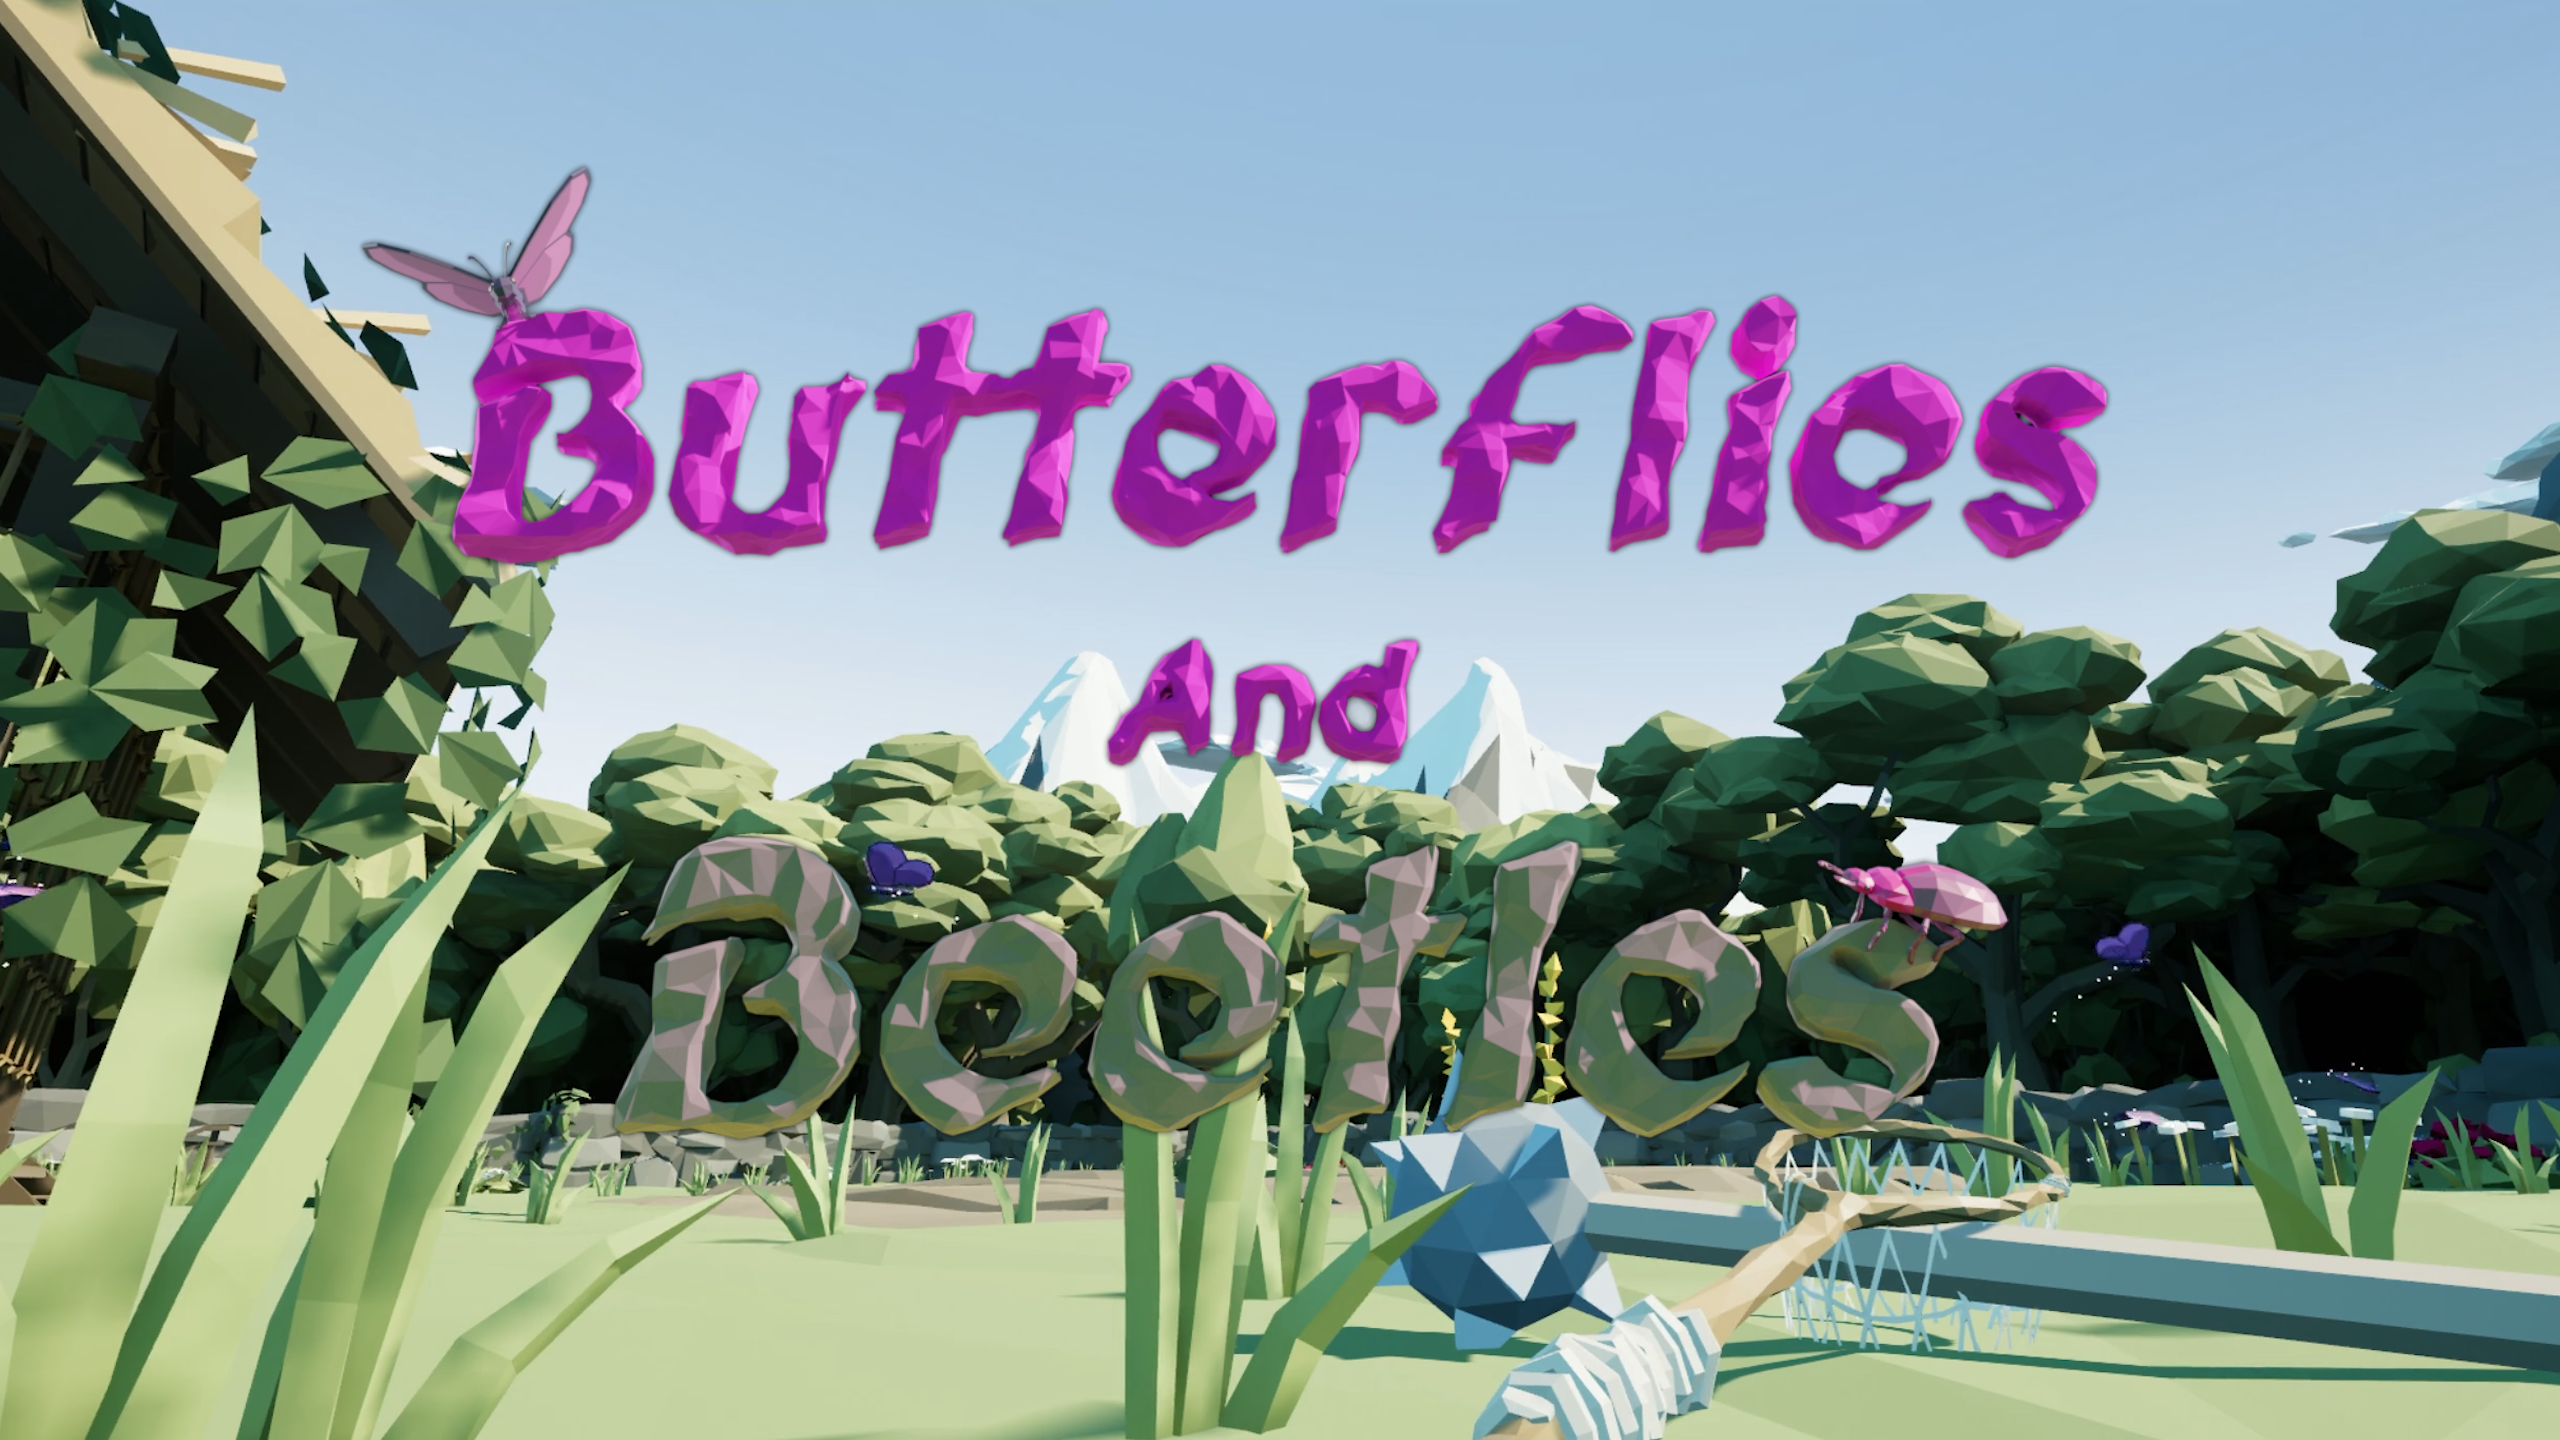 Butterflies and Beetles